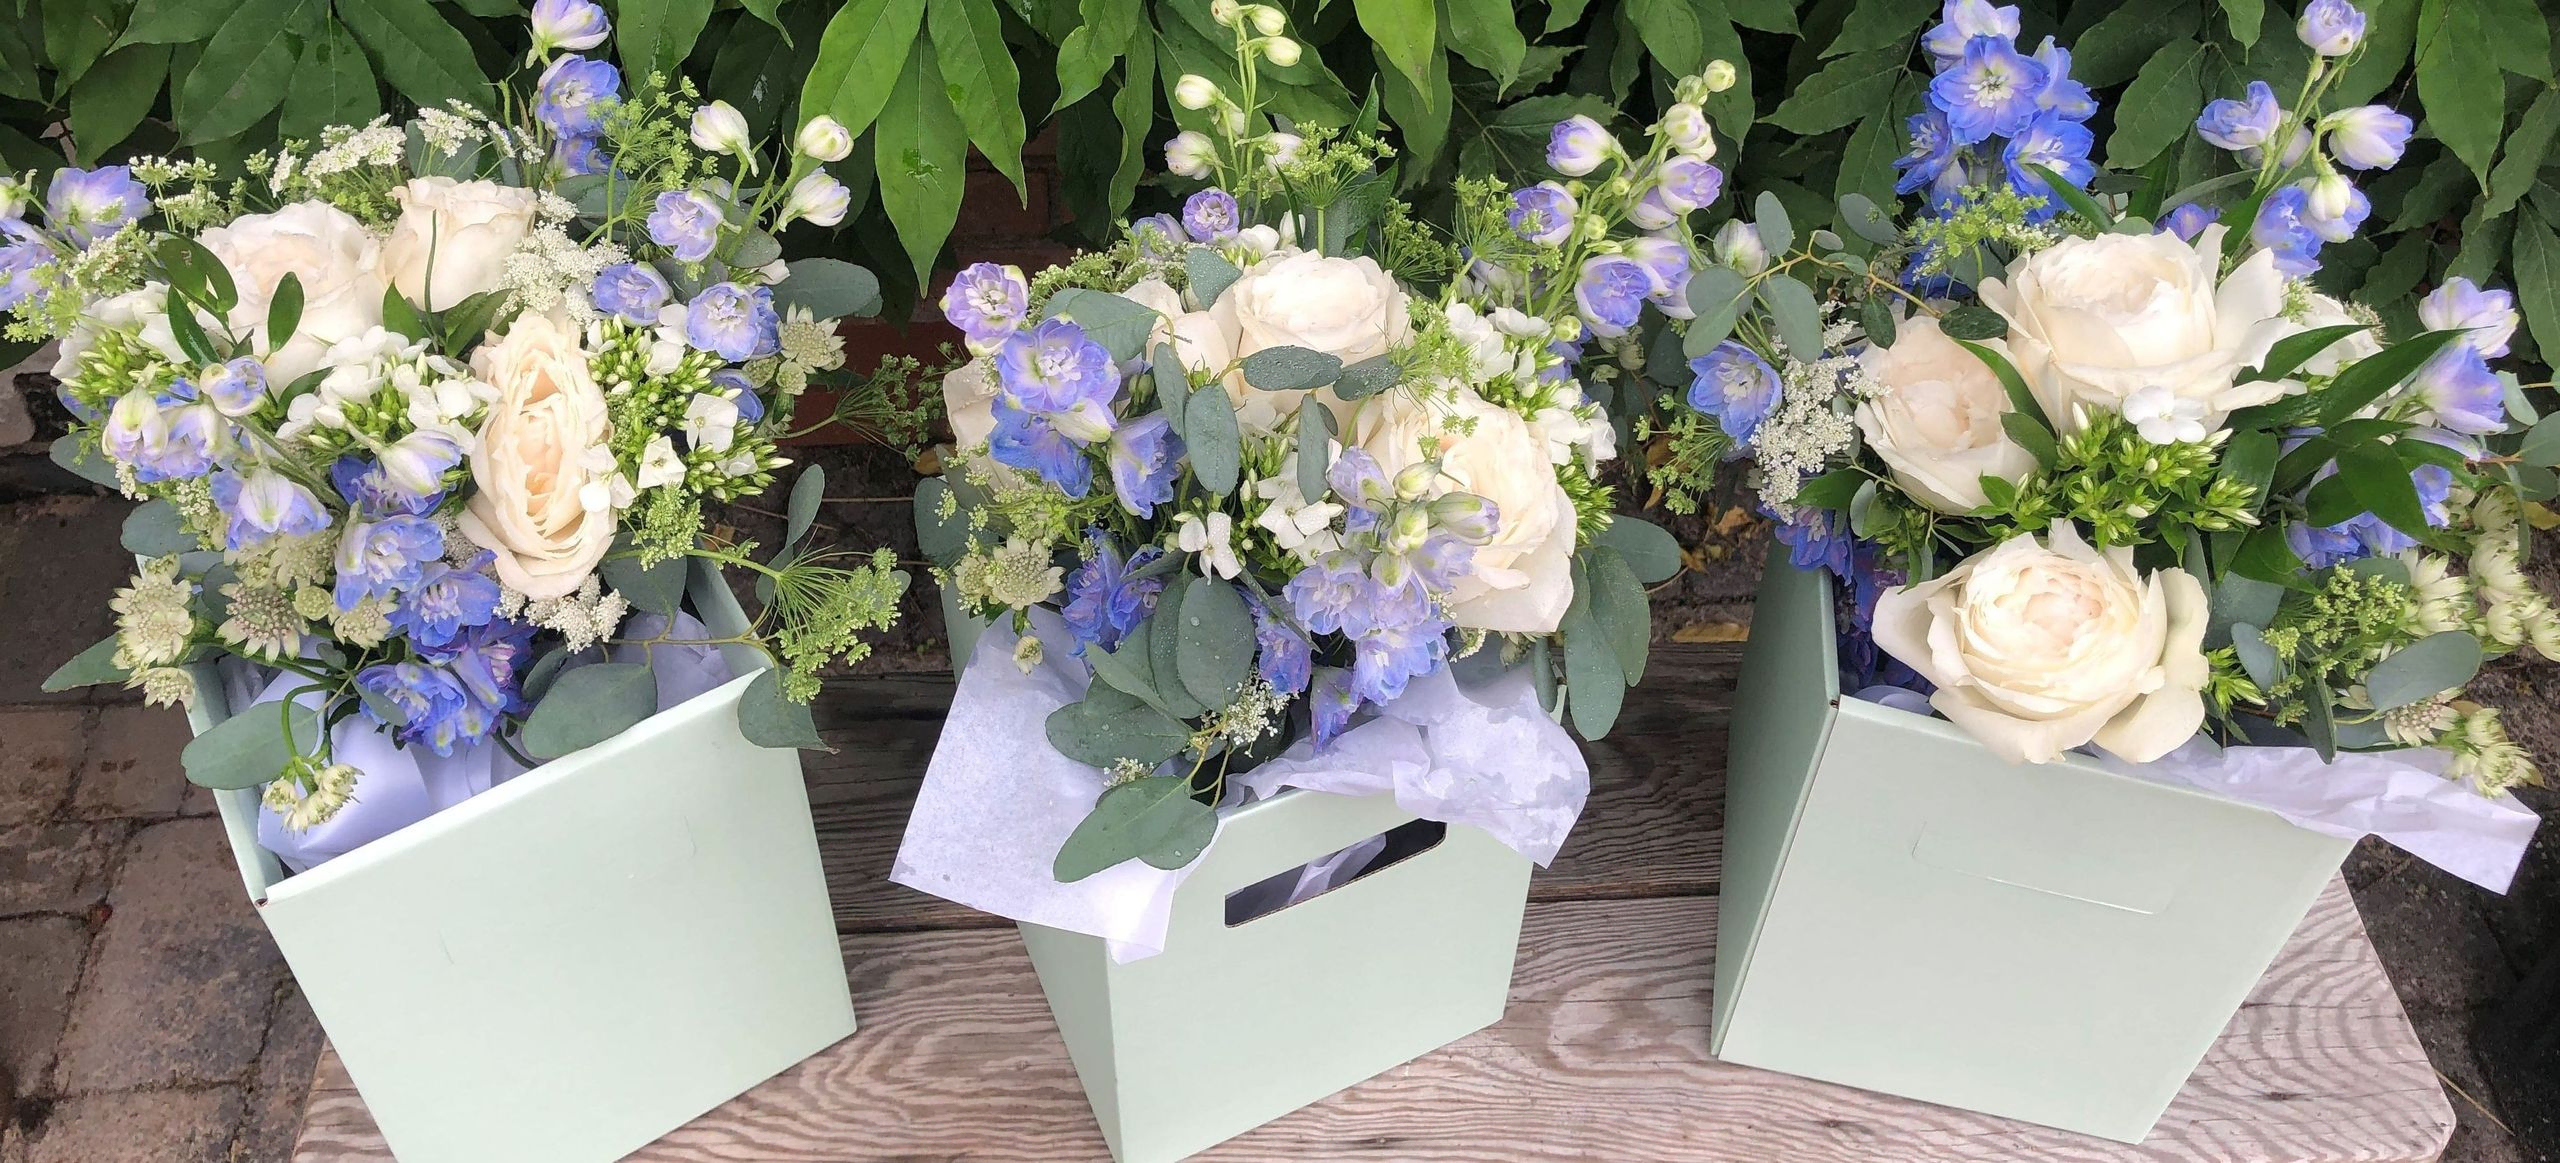 Outdoor wedding in warwickshire with flower display